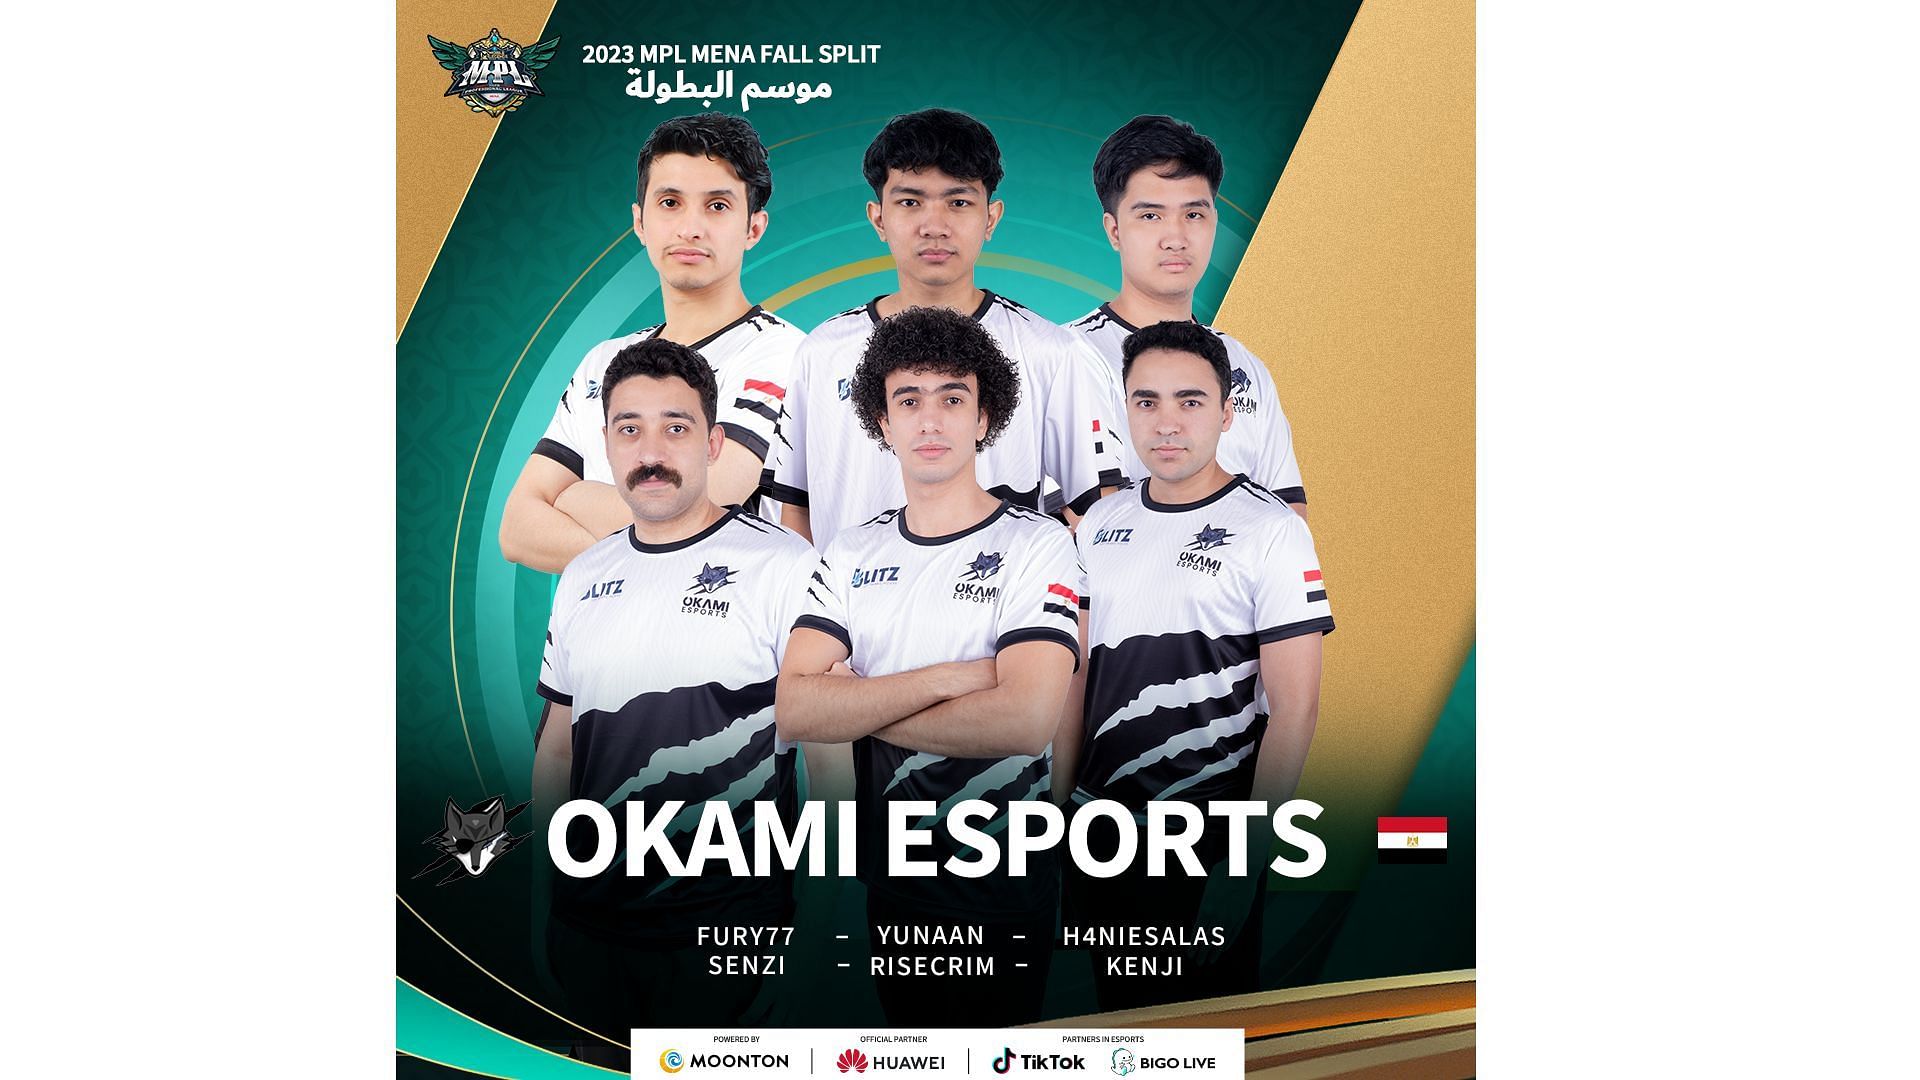 Okami eSports has an impressive roster this MPL MENA Fall Split season (Image via Moonton Games)